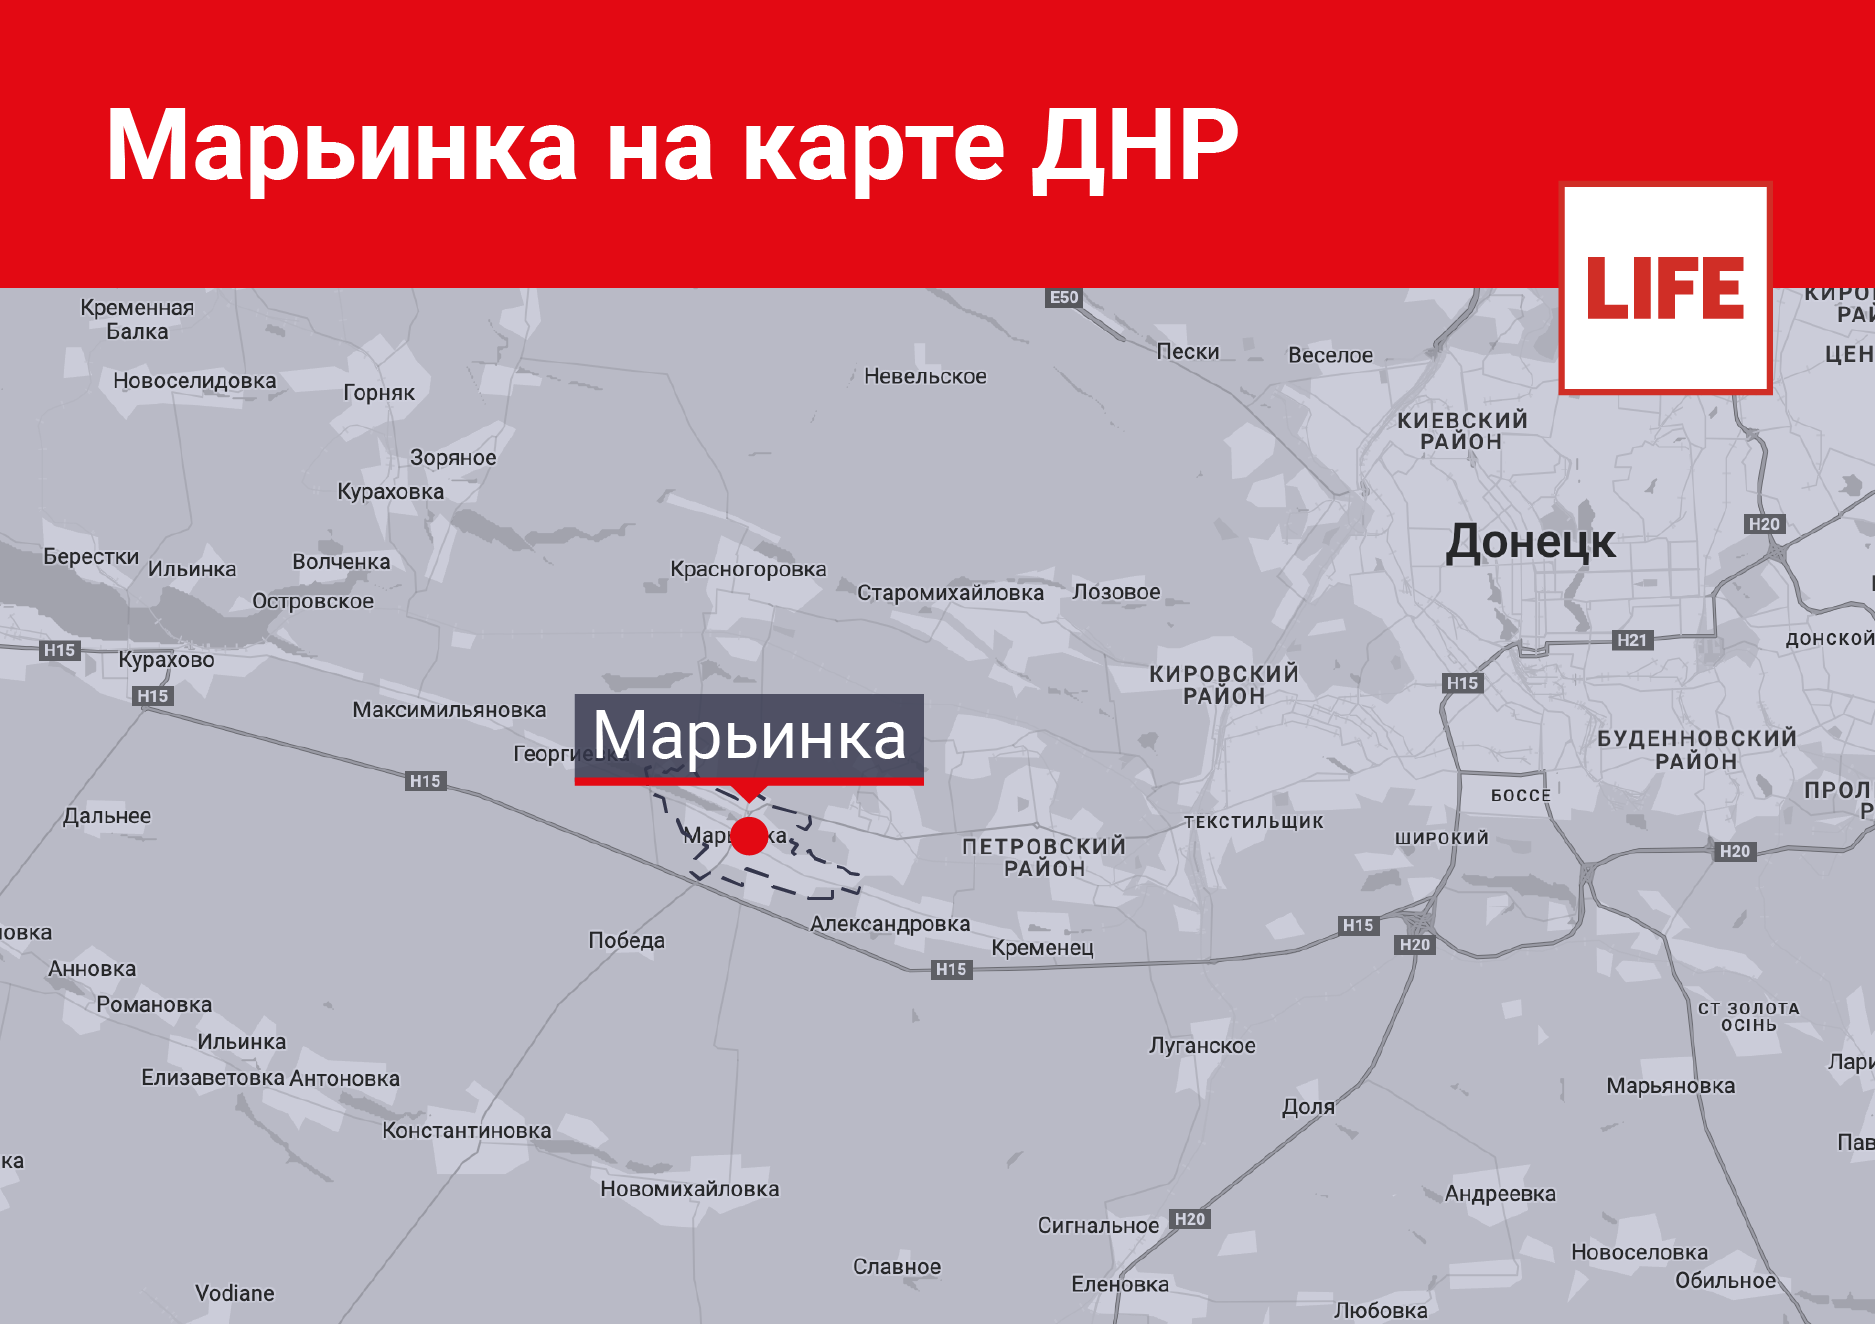 Марьинка на карте ДНР. Инфографика © LIFE